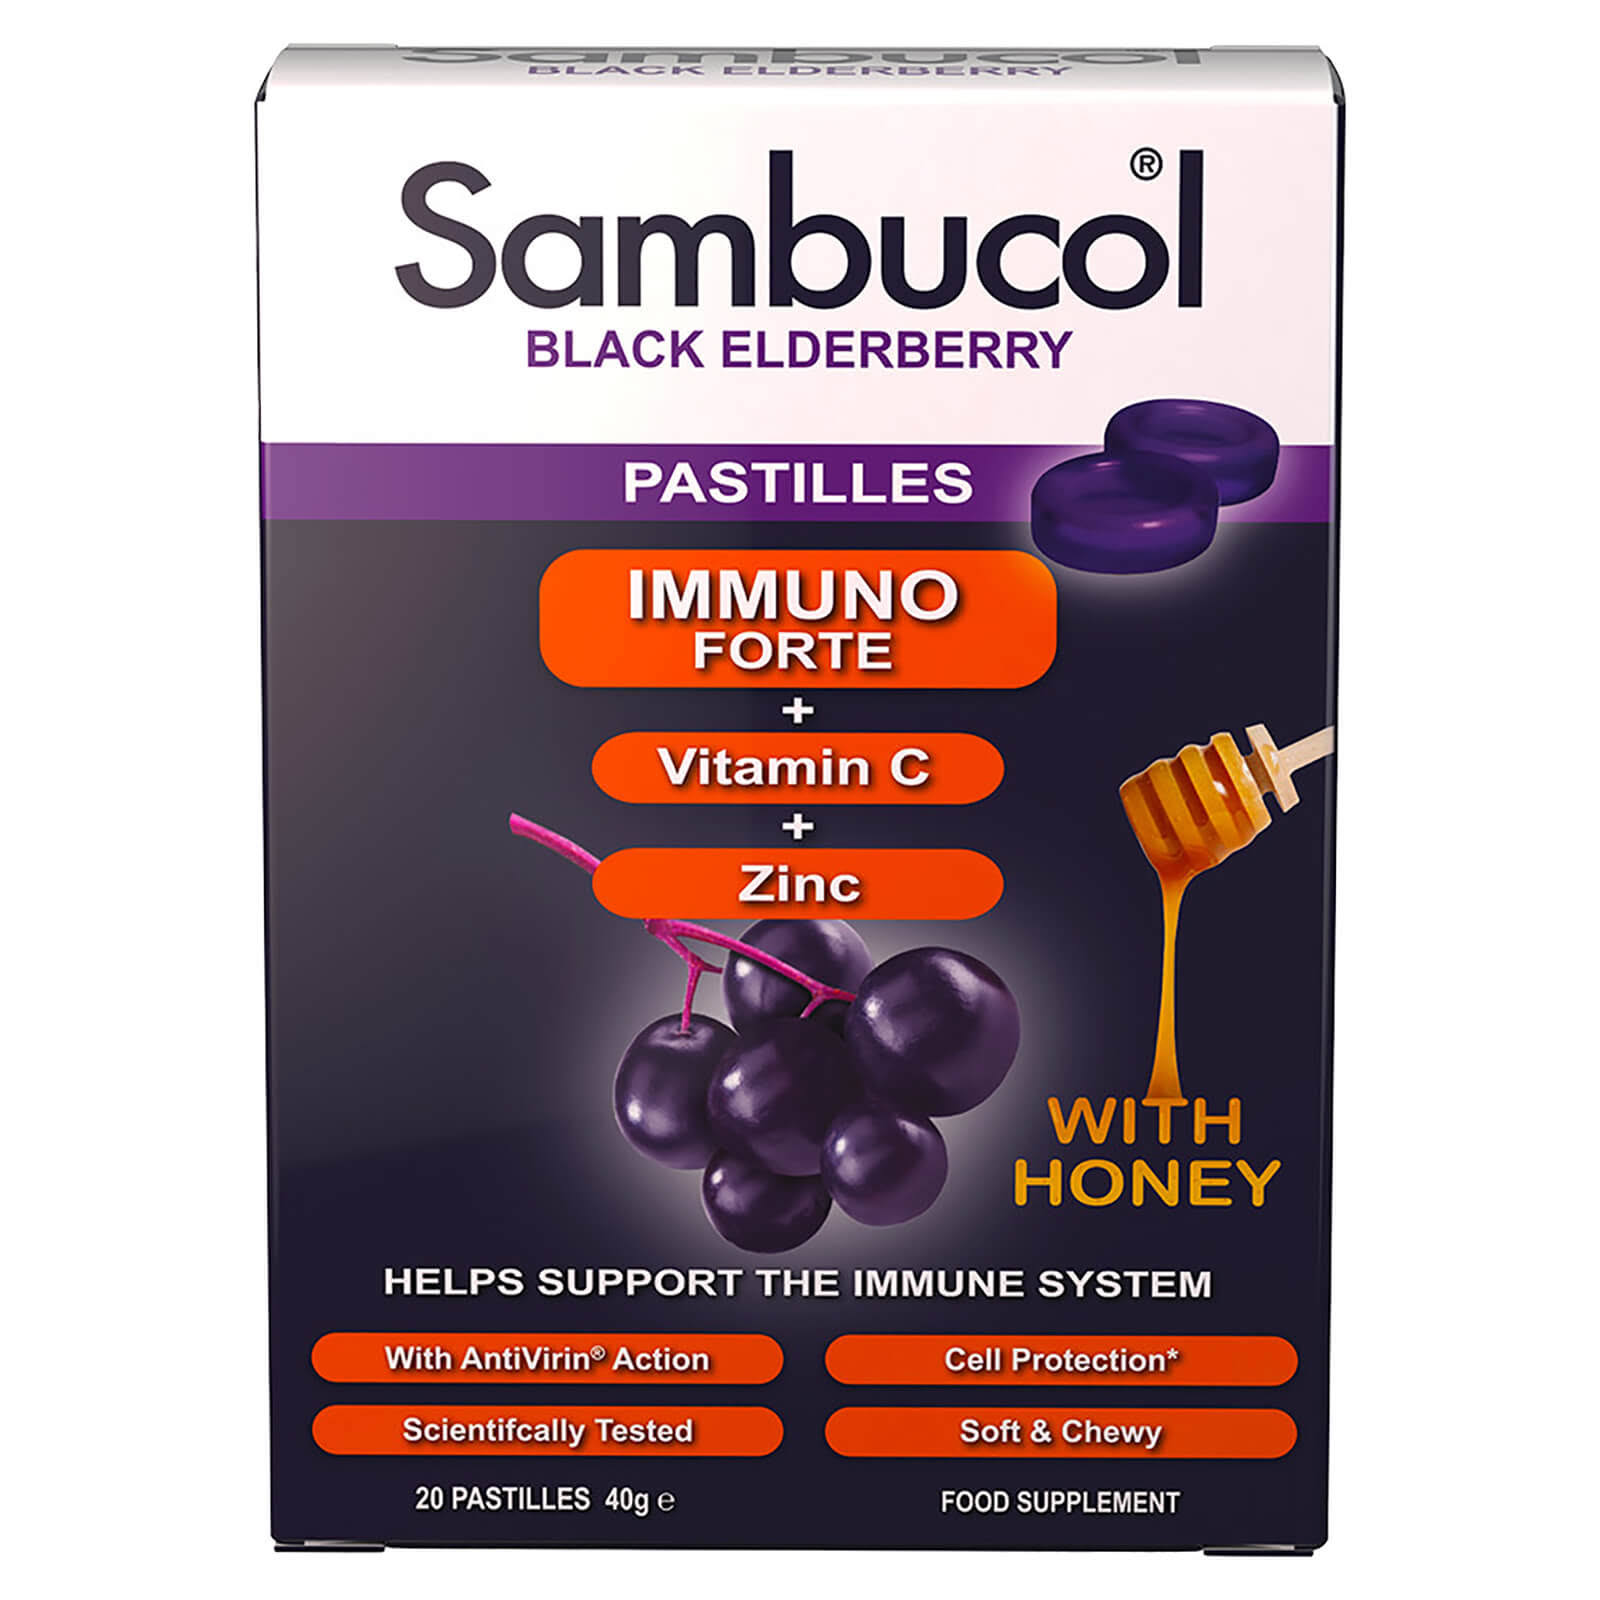 Sambucol Immuno Forte Pastilles - Black Elderberry/Honey, 40g, 20ct